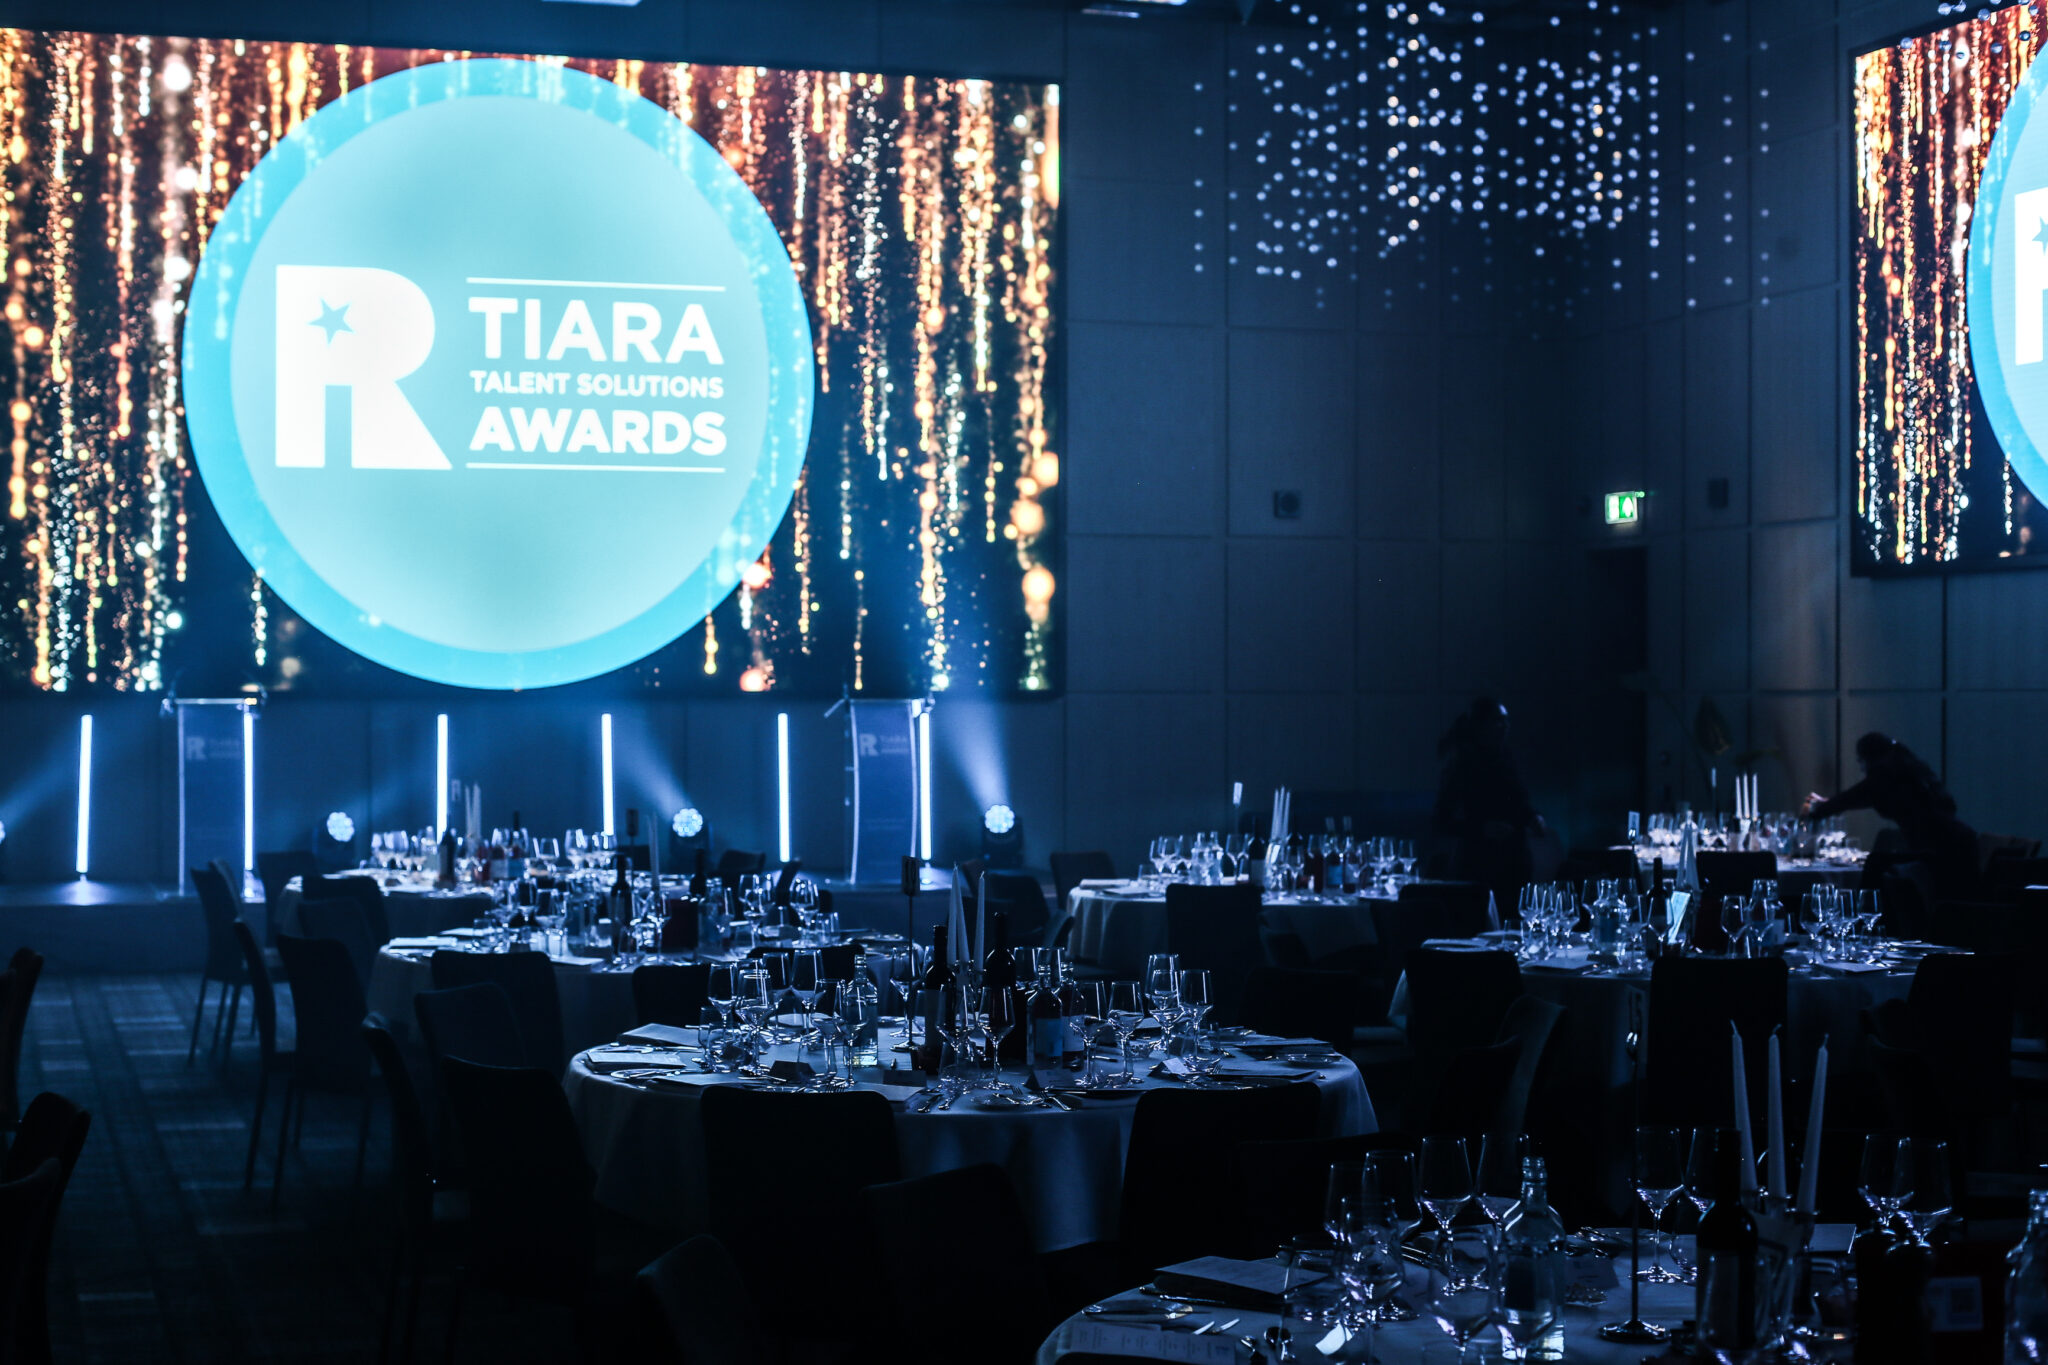 TIARA Talent Solutions Awards Europe 2023